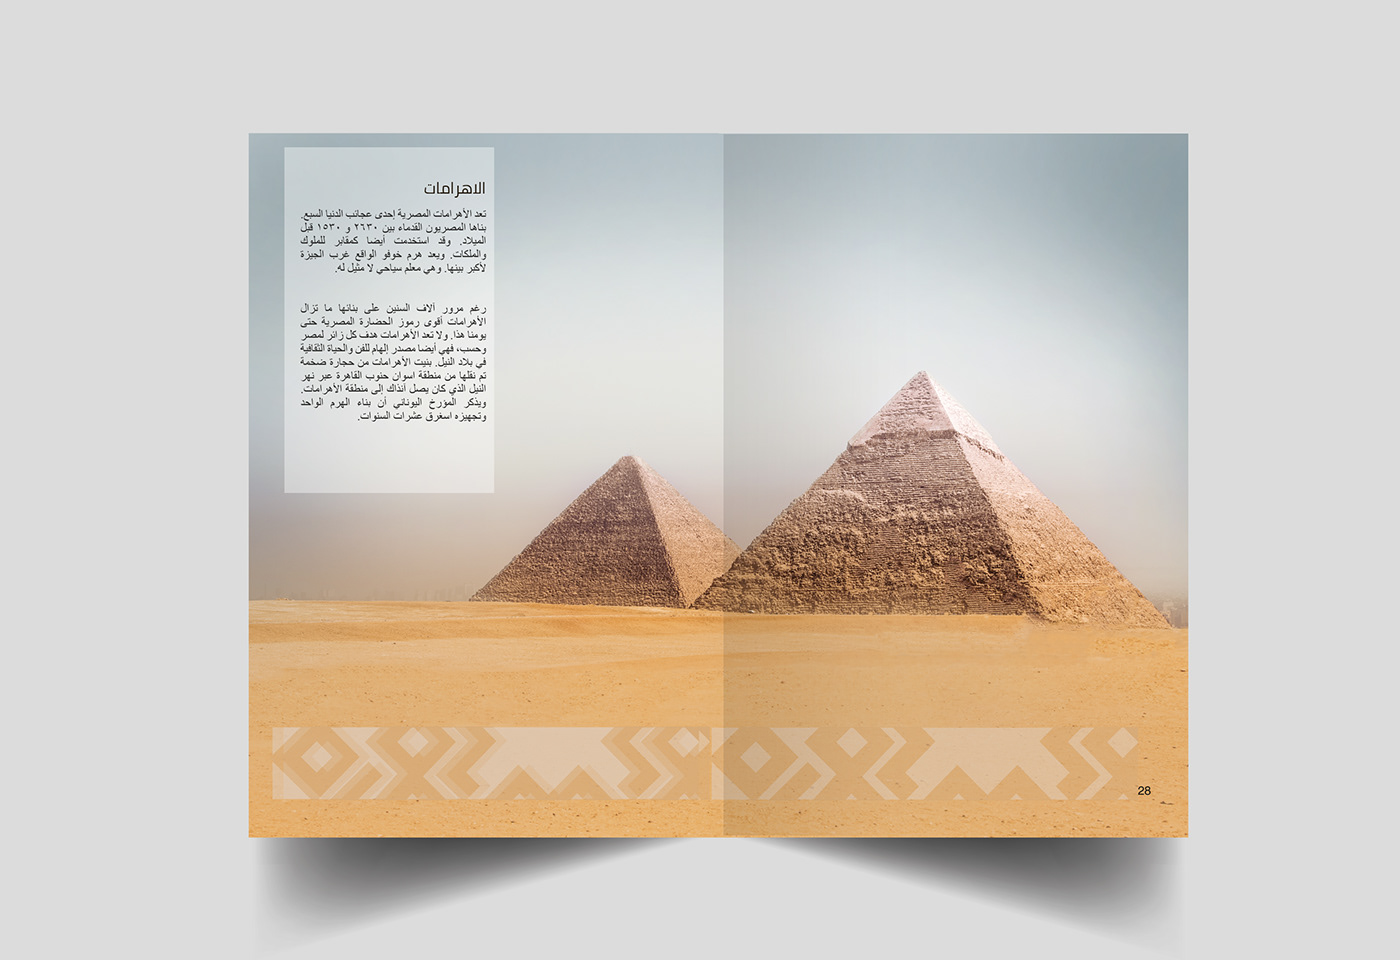 egypt cairo manipulation graduation project القاهرة القاهره مصر القديمة مشروع تخرج Old Egypt القاهرة التاريخية